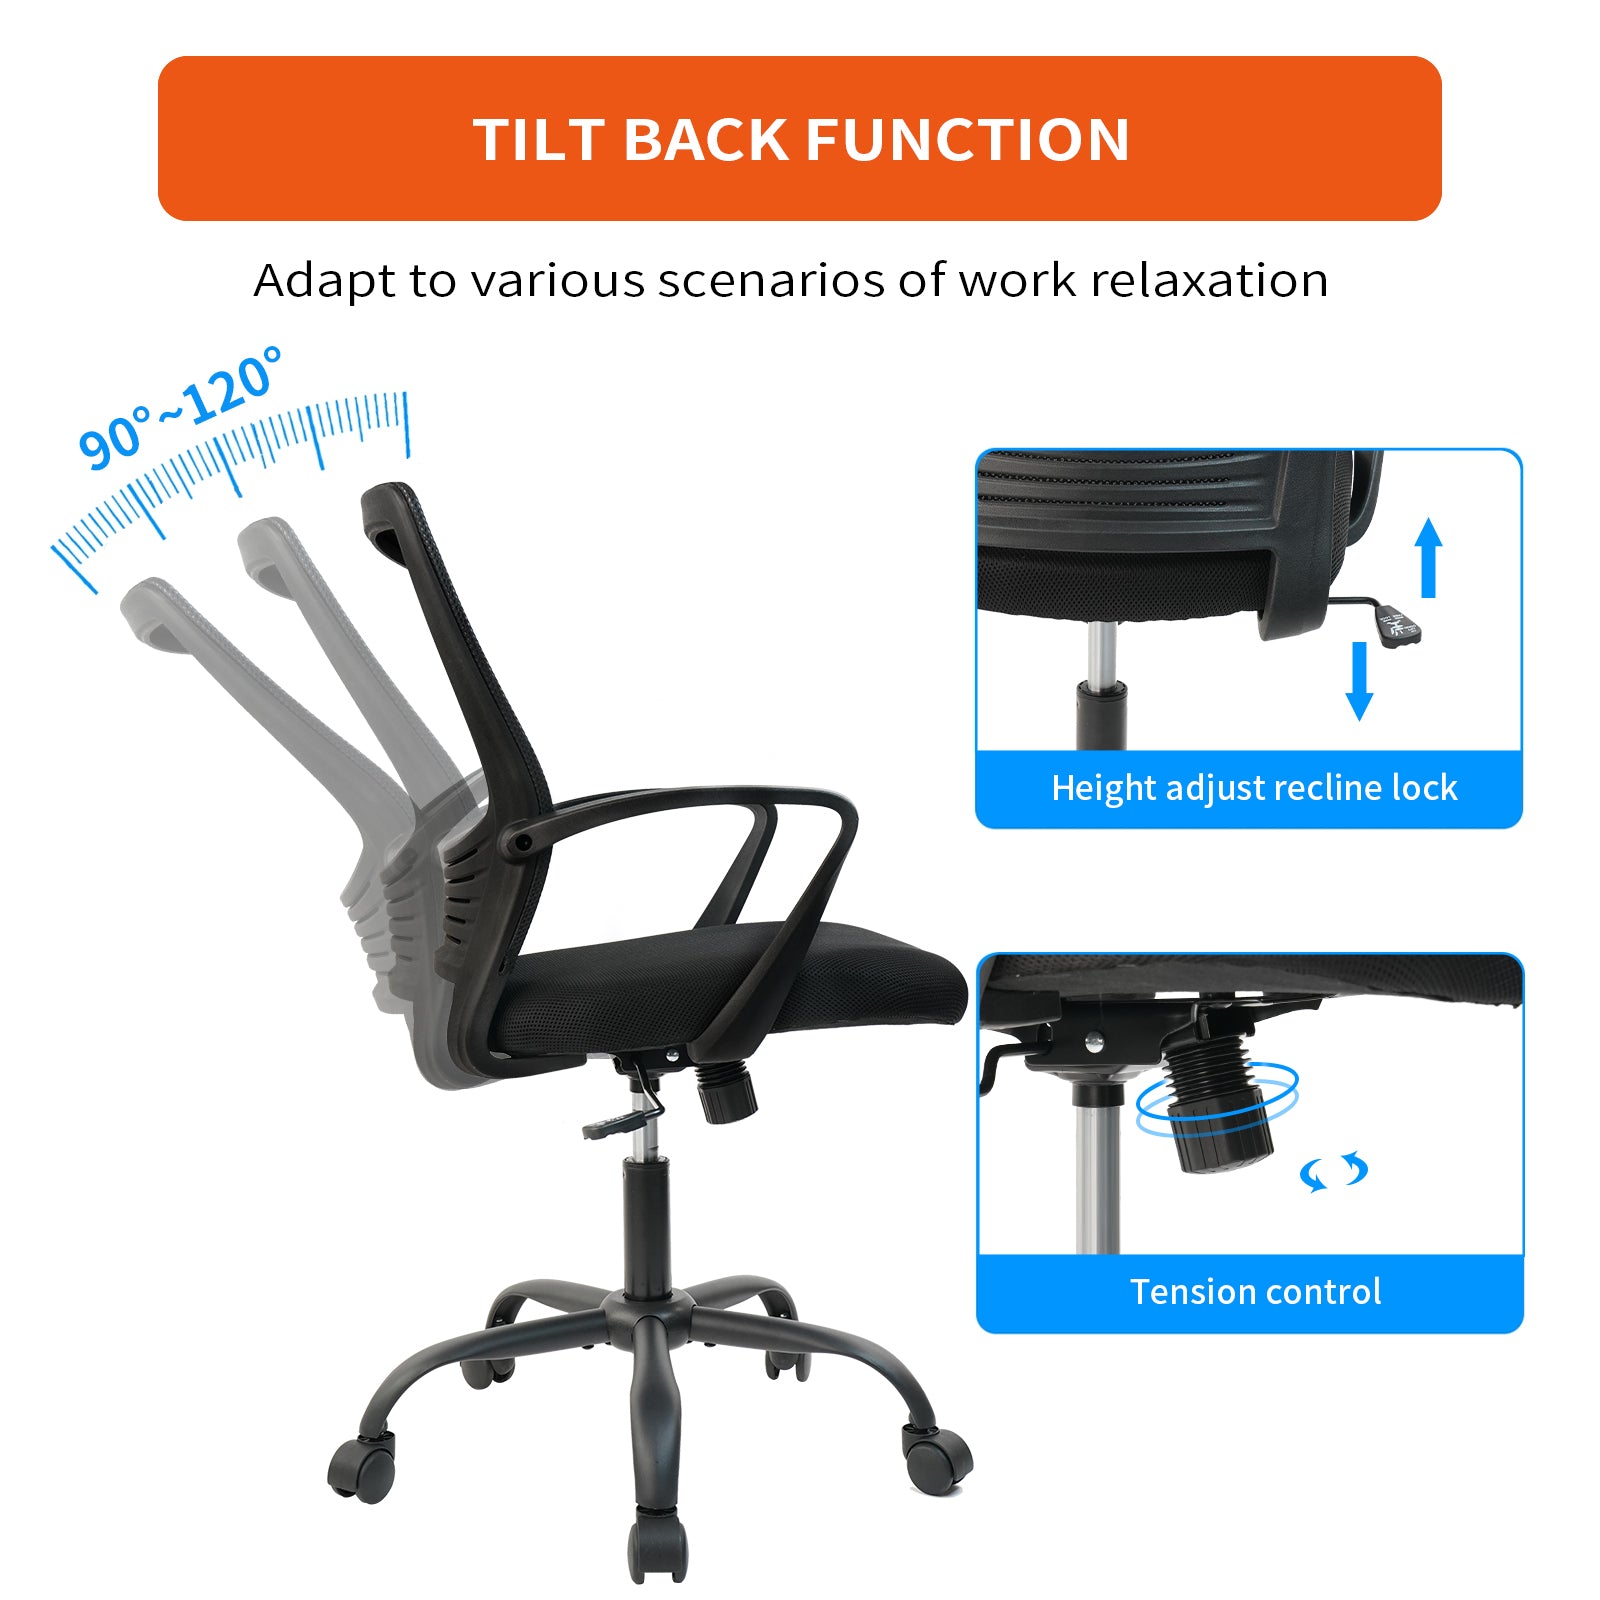 Closer Look: Lumbar Height Adjustment On Ergonomic Office Chairs 